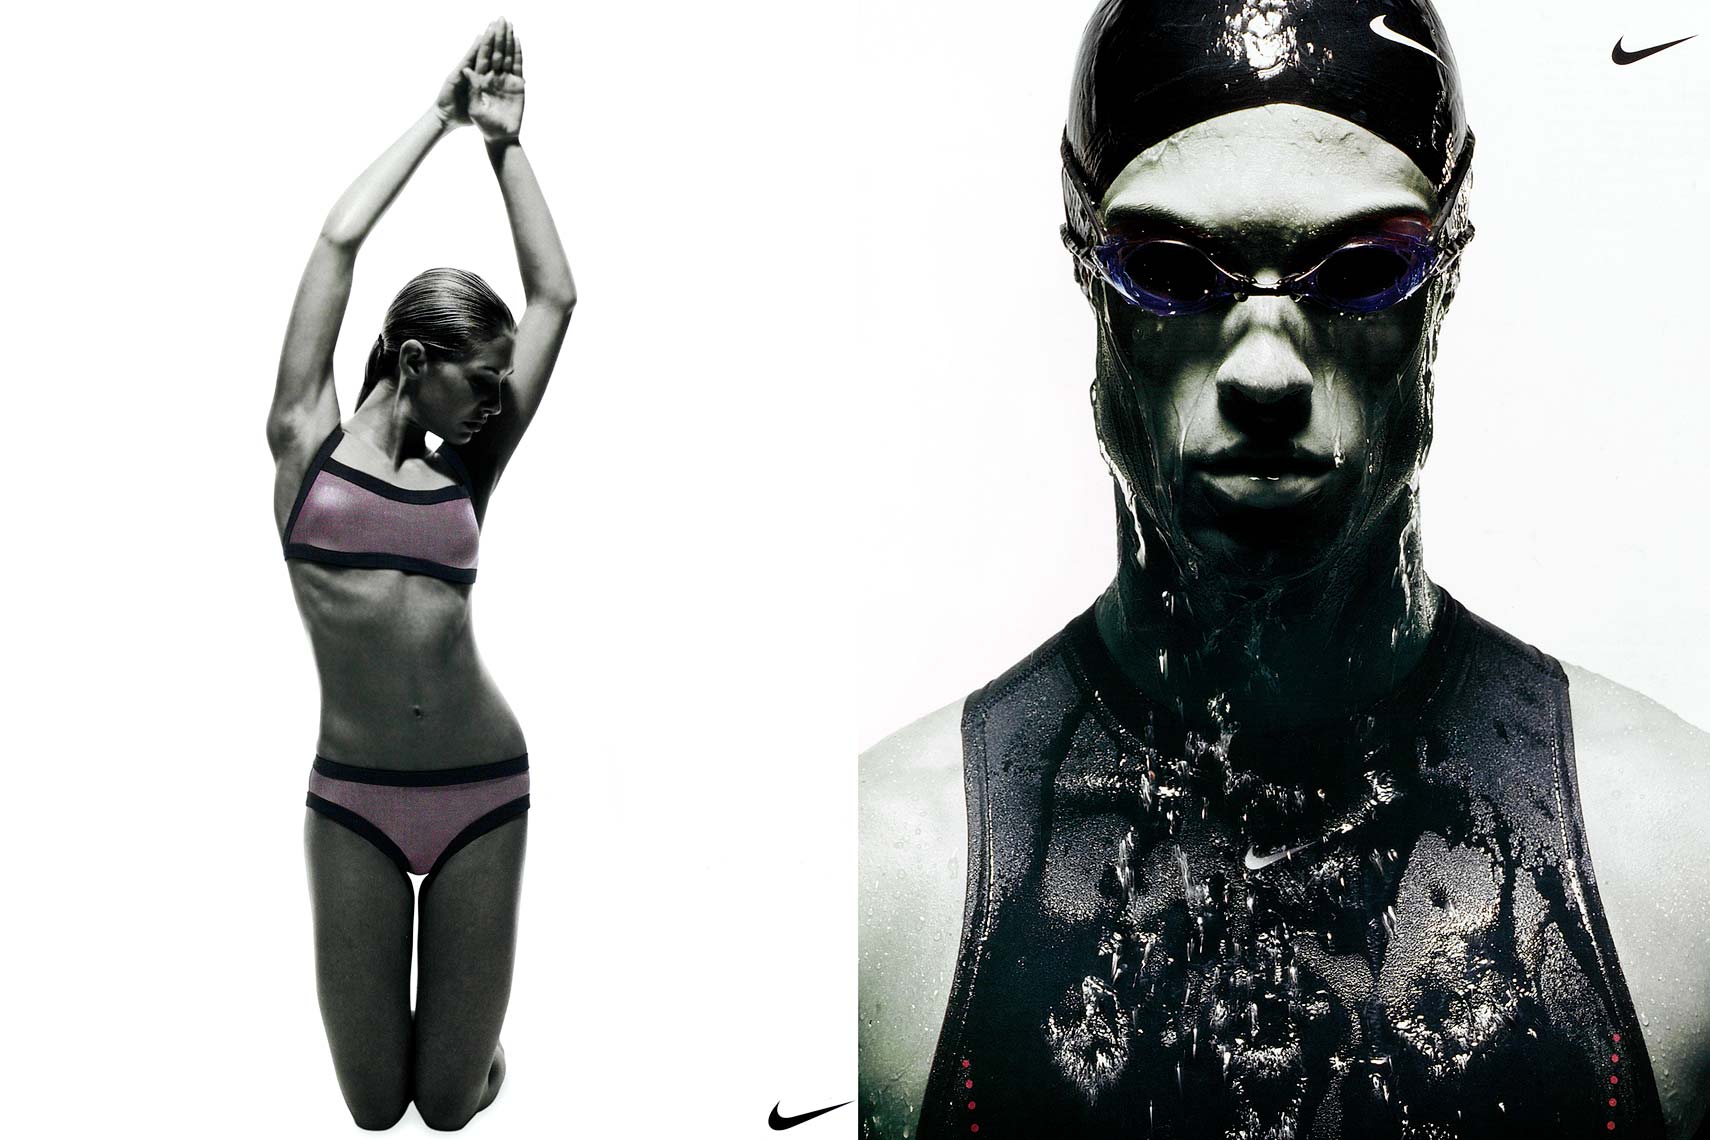 Nike swim 1